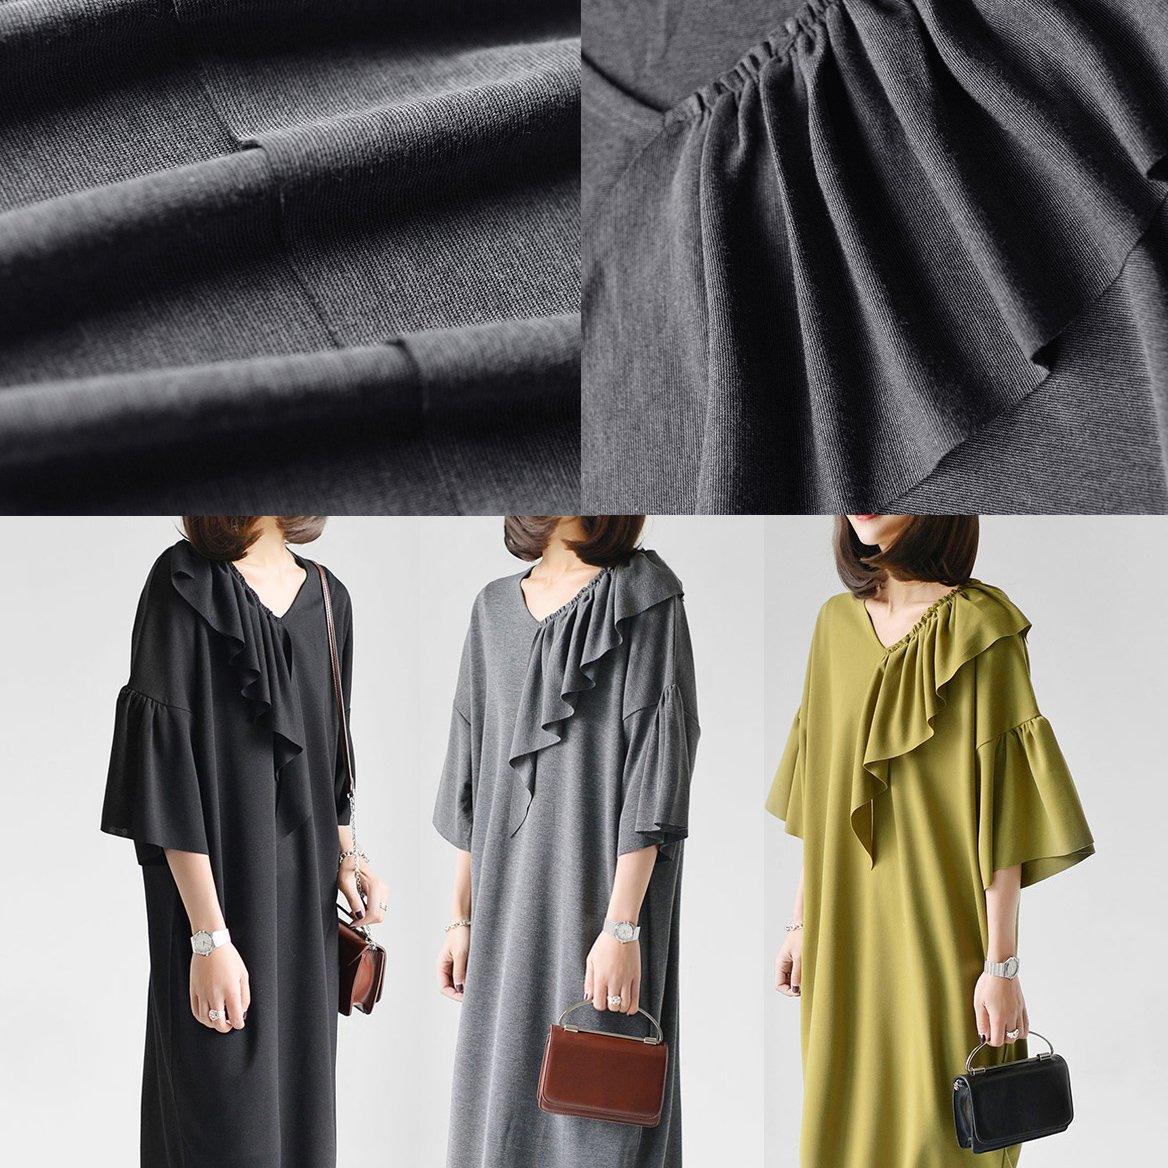 Black cozy dress oversize asymmetrical modal cotton caftan dress - Omychic